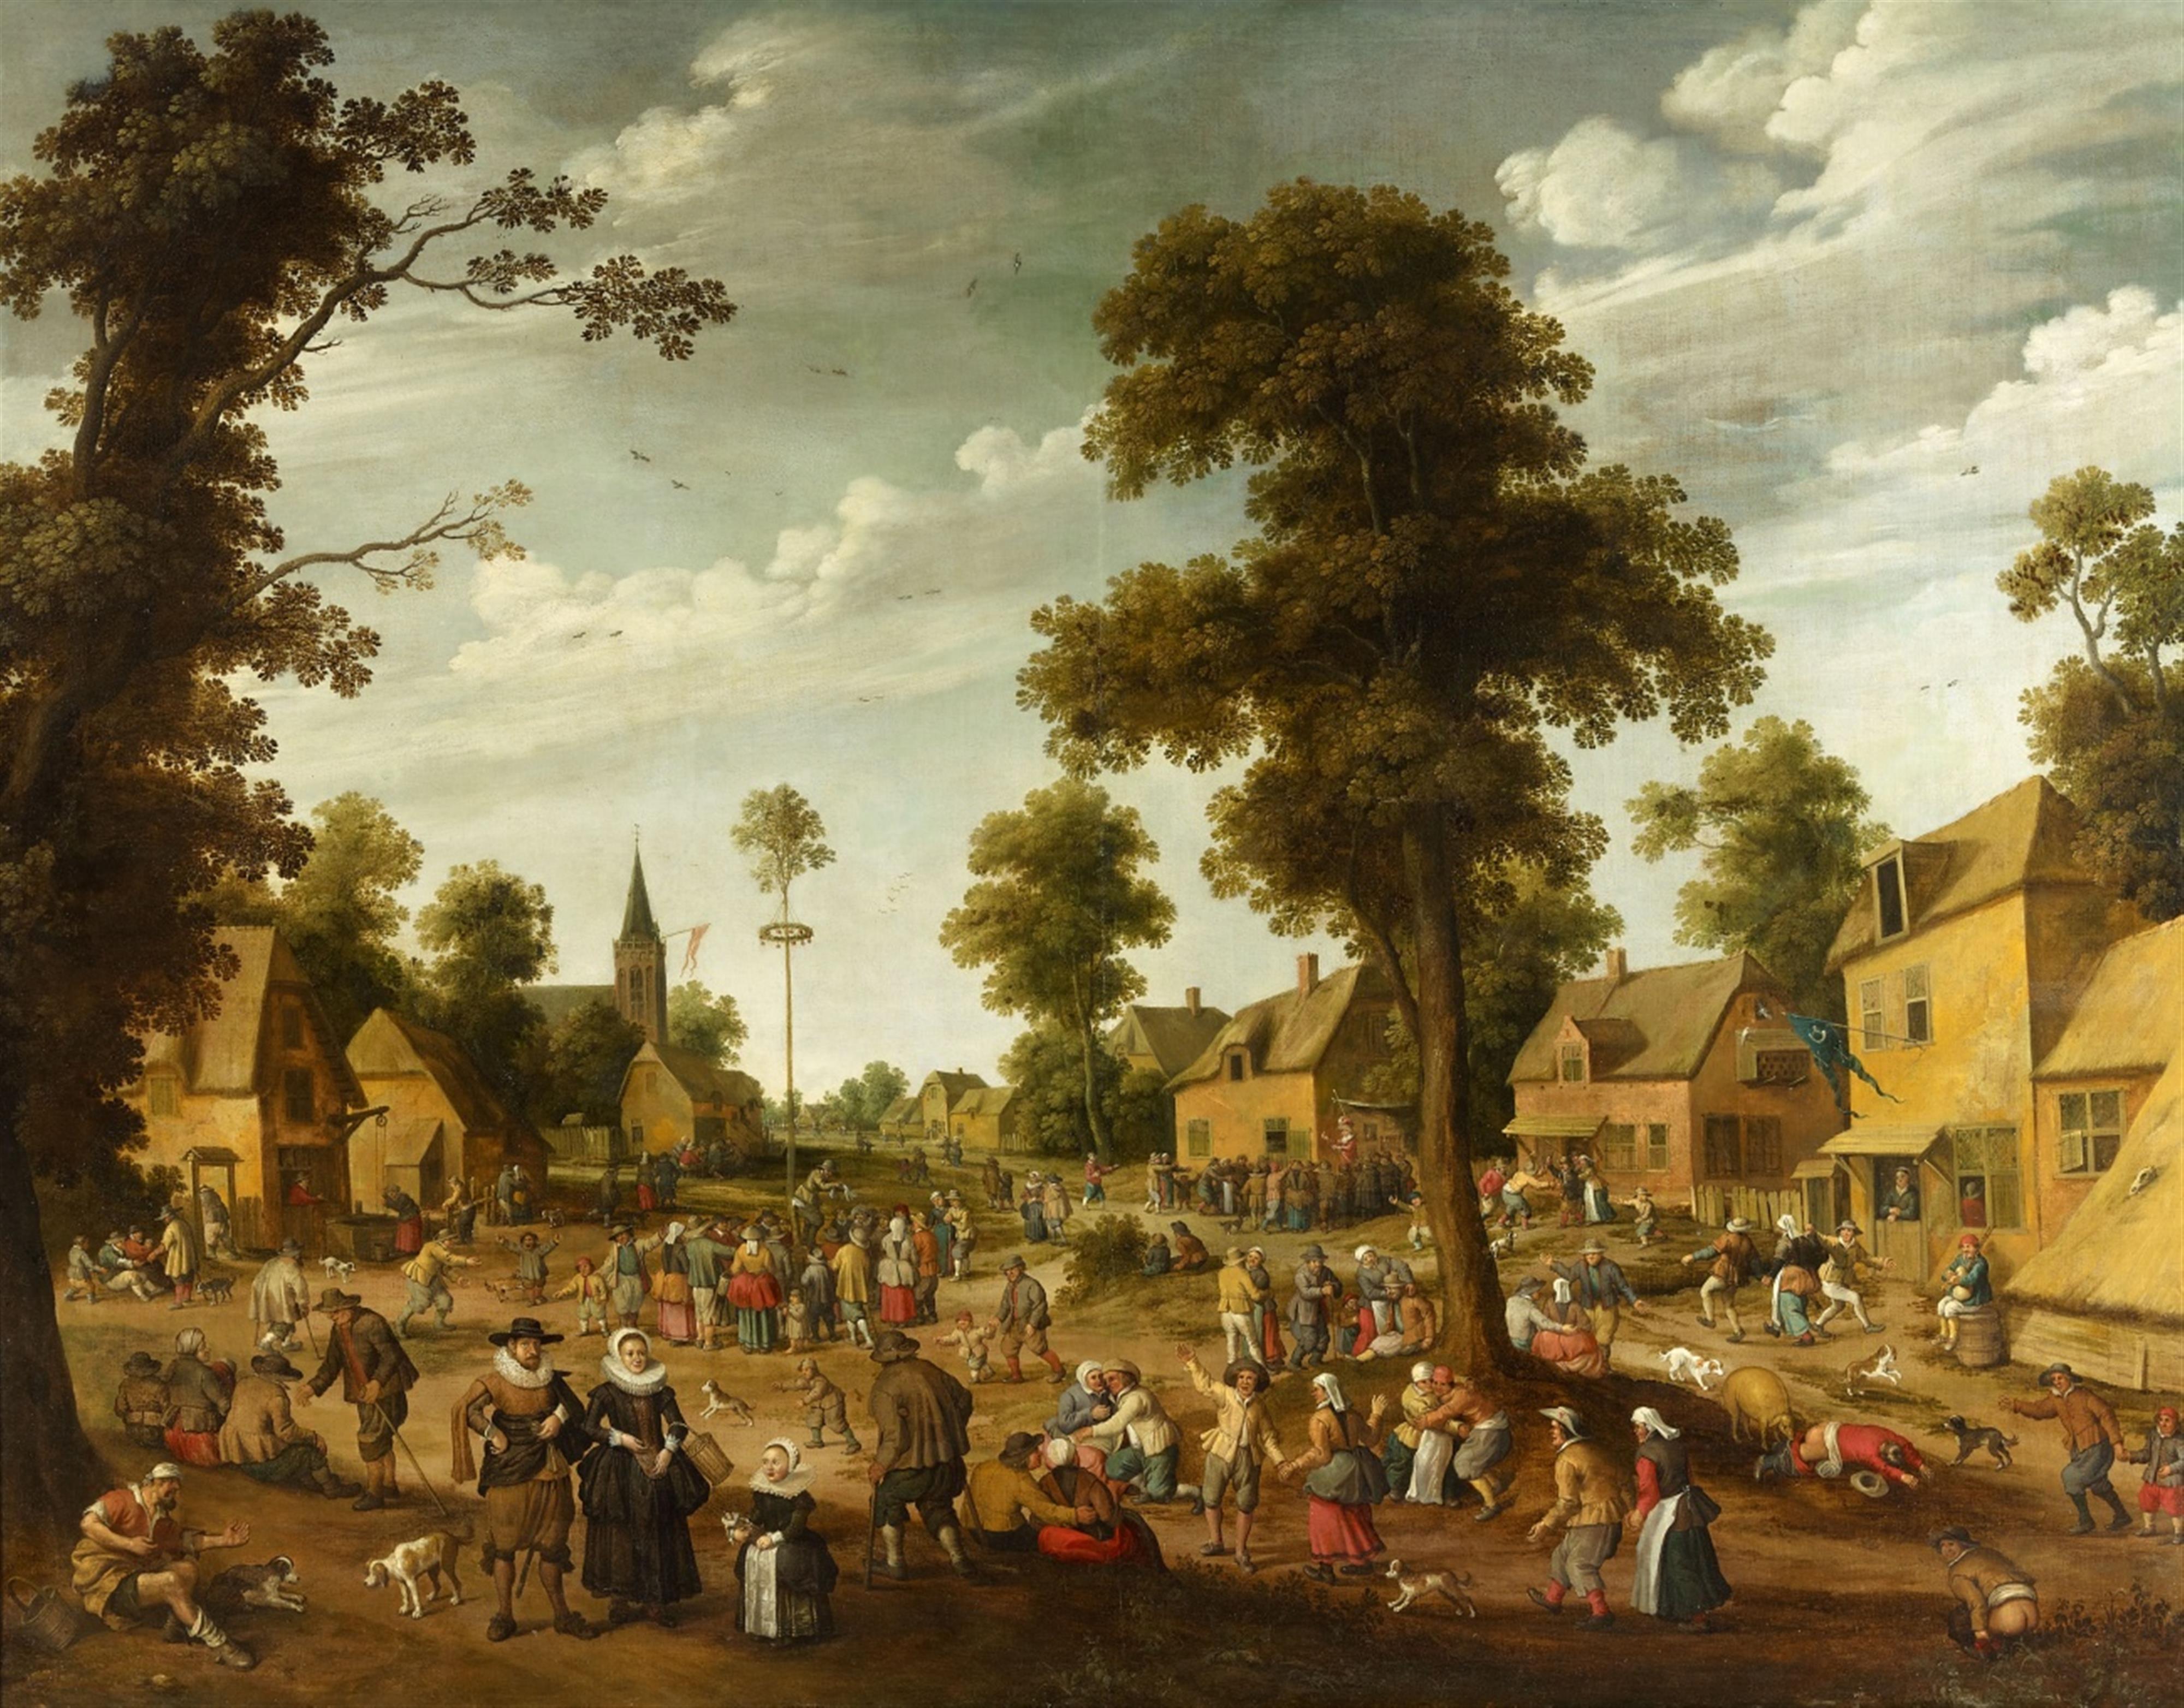 Joost Cornelisz. Droochsloot - Peasant Festival in a Village Square - image-1